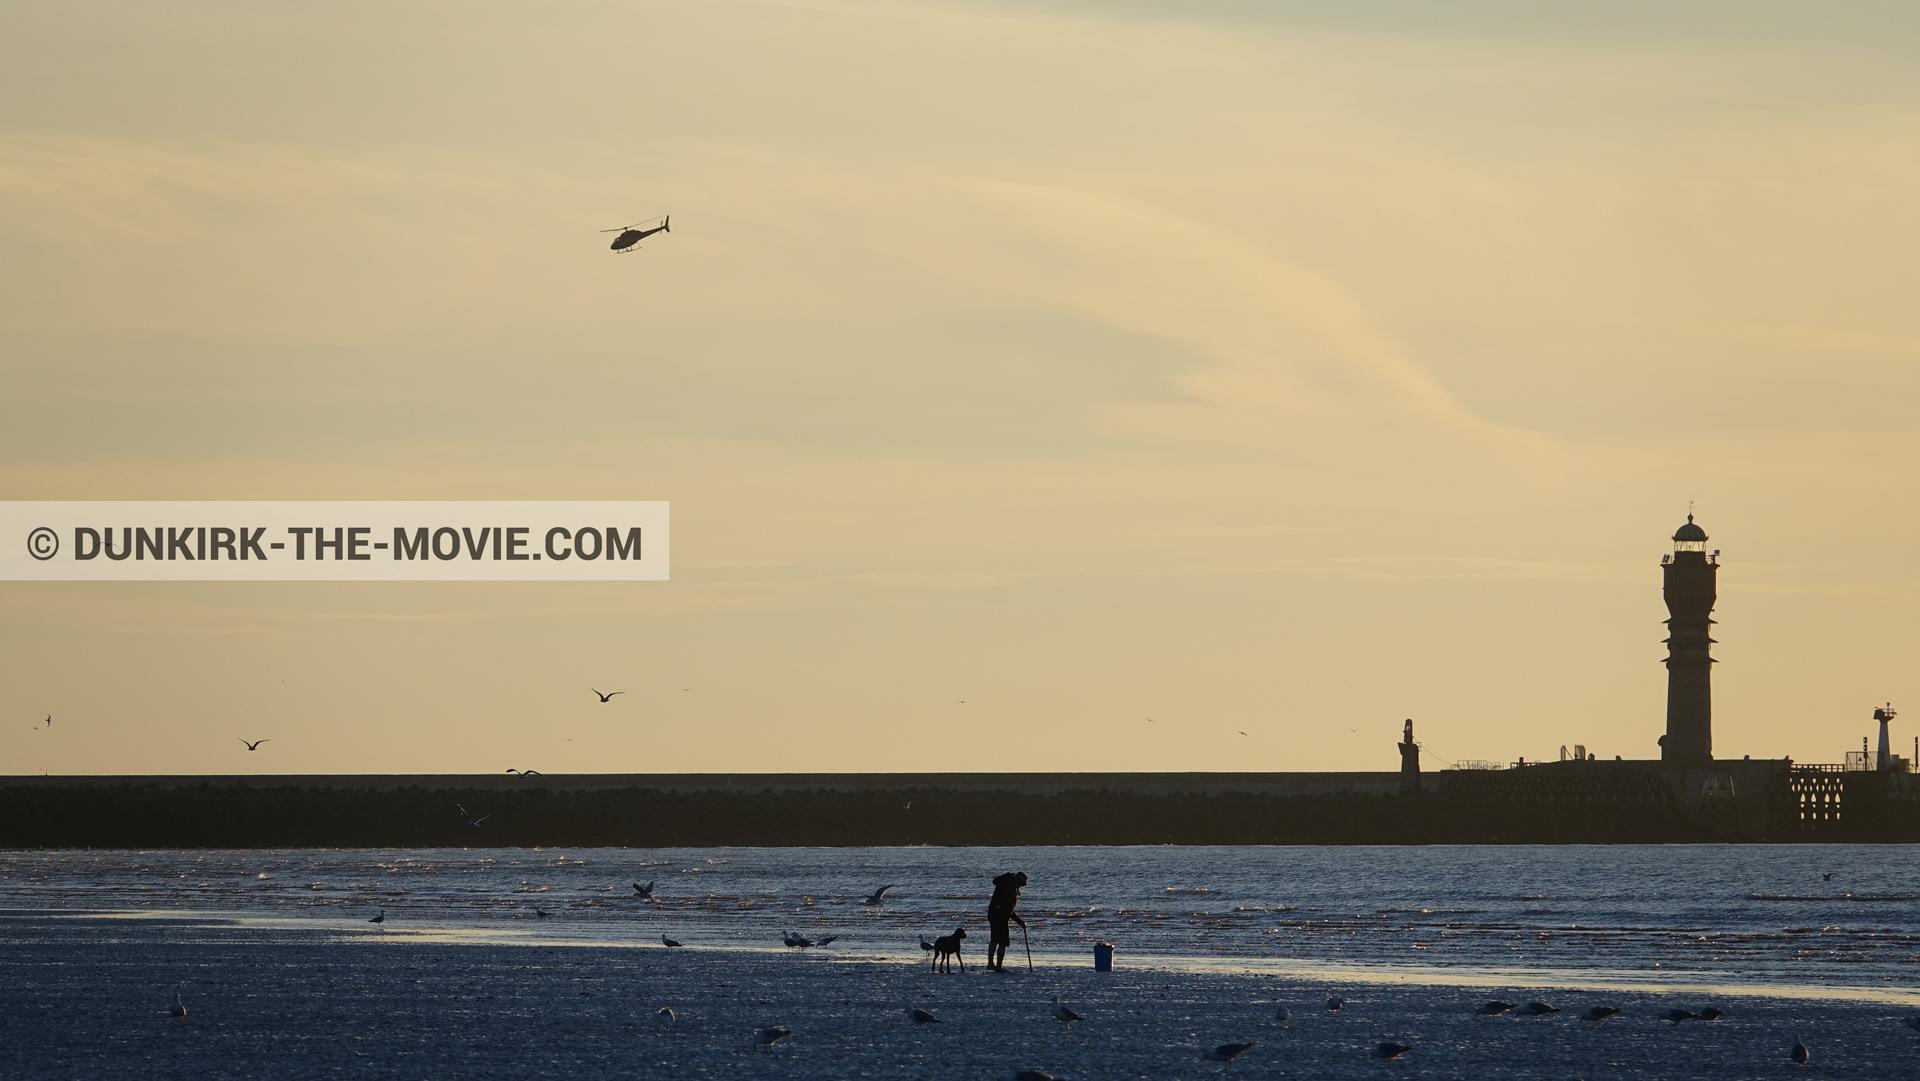 Photo avec ciel orangé, hélicoptère caméra, mer calme,  des dessous du Film Dunkerque de Nolan